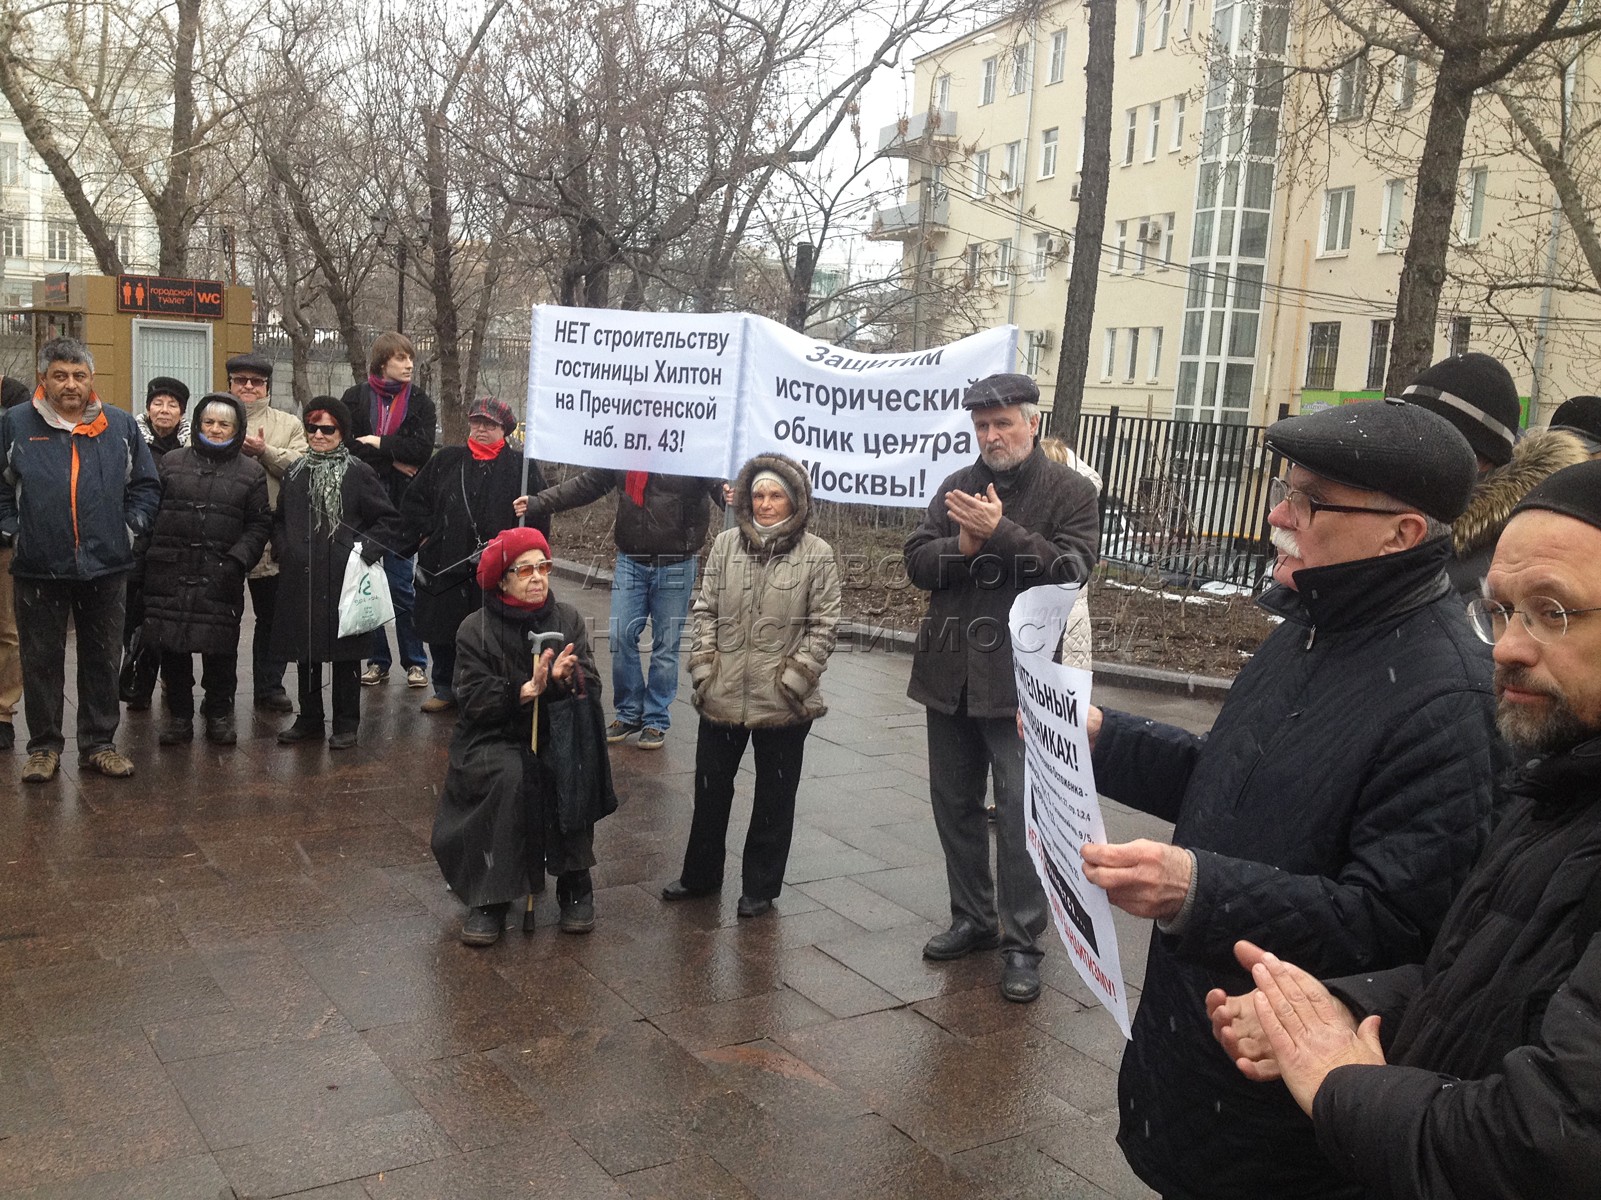 Митинги против строительства. Митинг против строительства. Против стройки. Митинг против строительства мечети в Москве. Митинги против строительства гаражей.